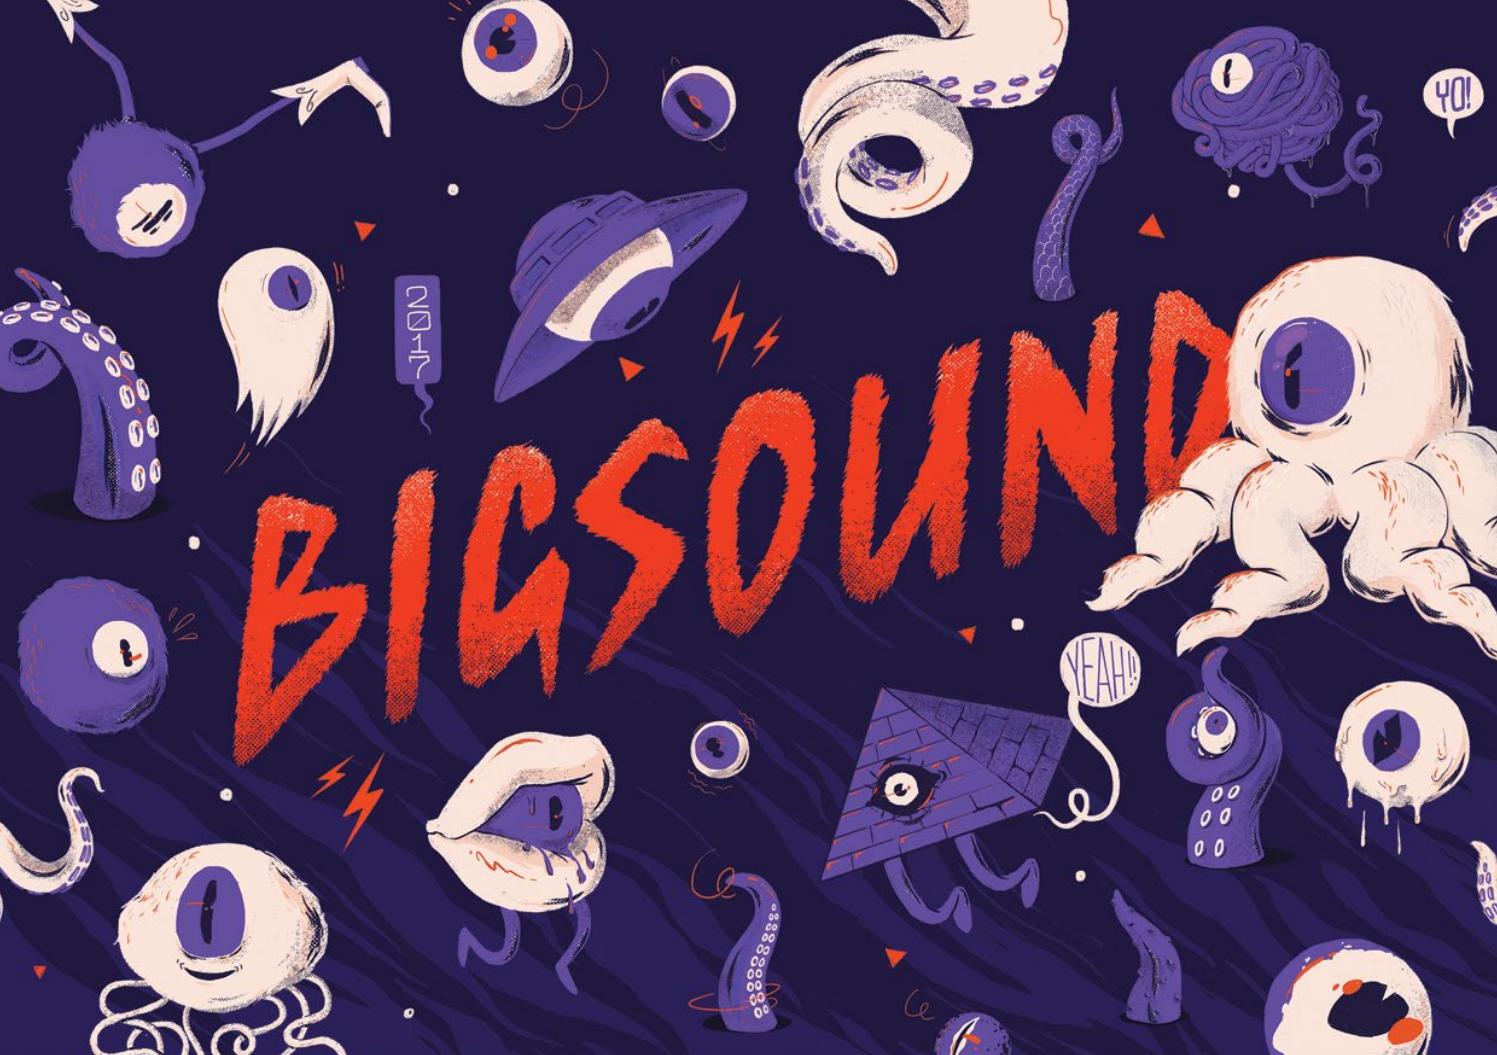 Bigsound Printed Program By Issuu